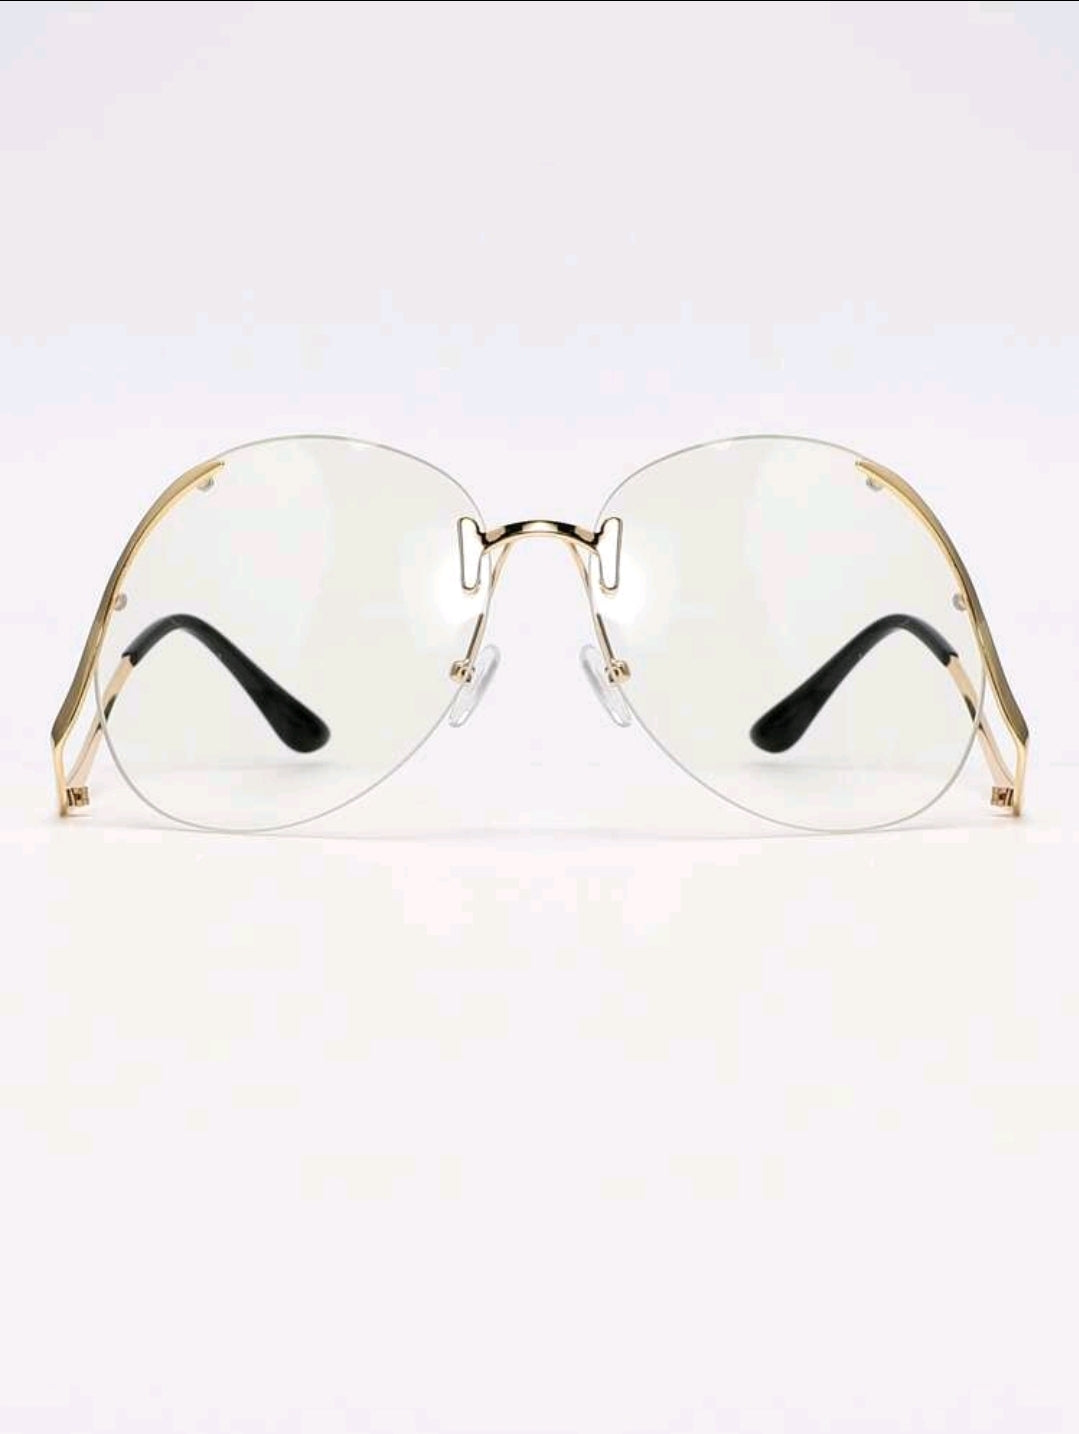 Crave Dior Nerdiana Glasses